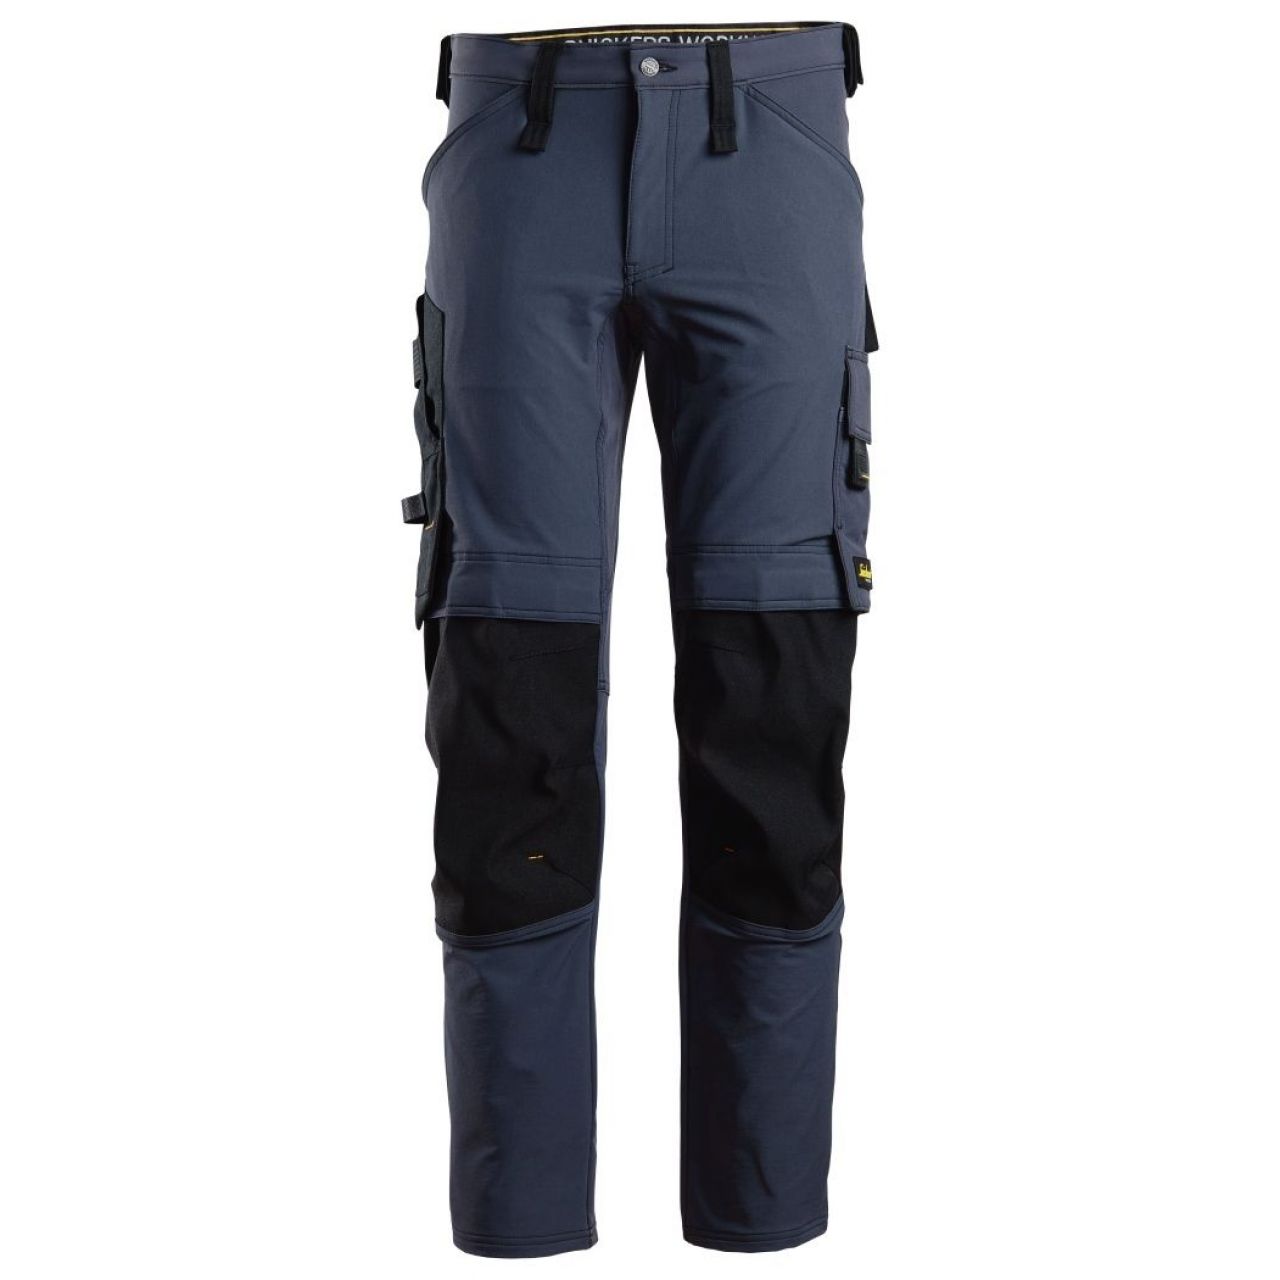 Pantalon elastico AllroundWork azul marino-negro talla 116